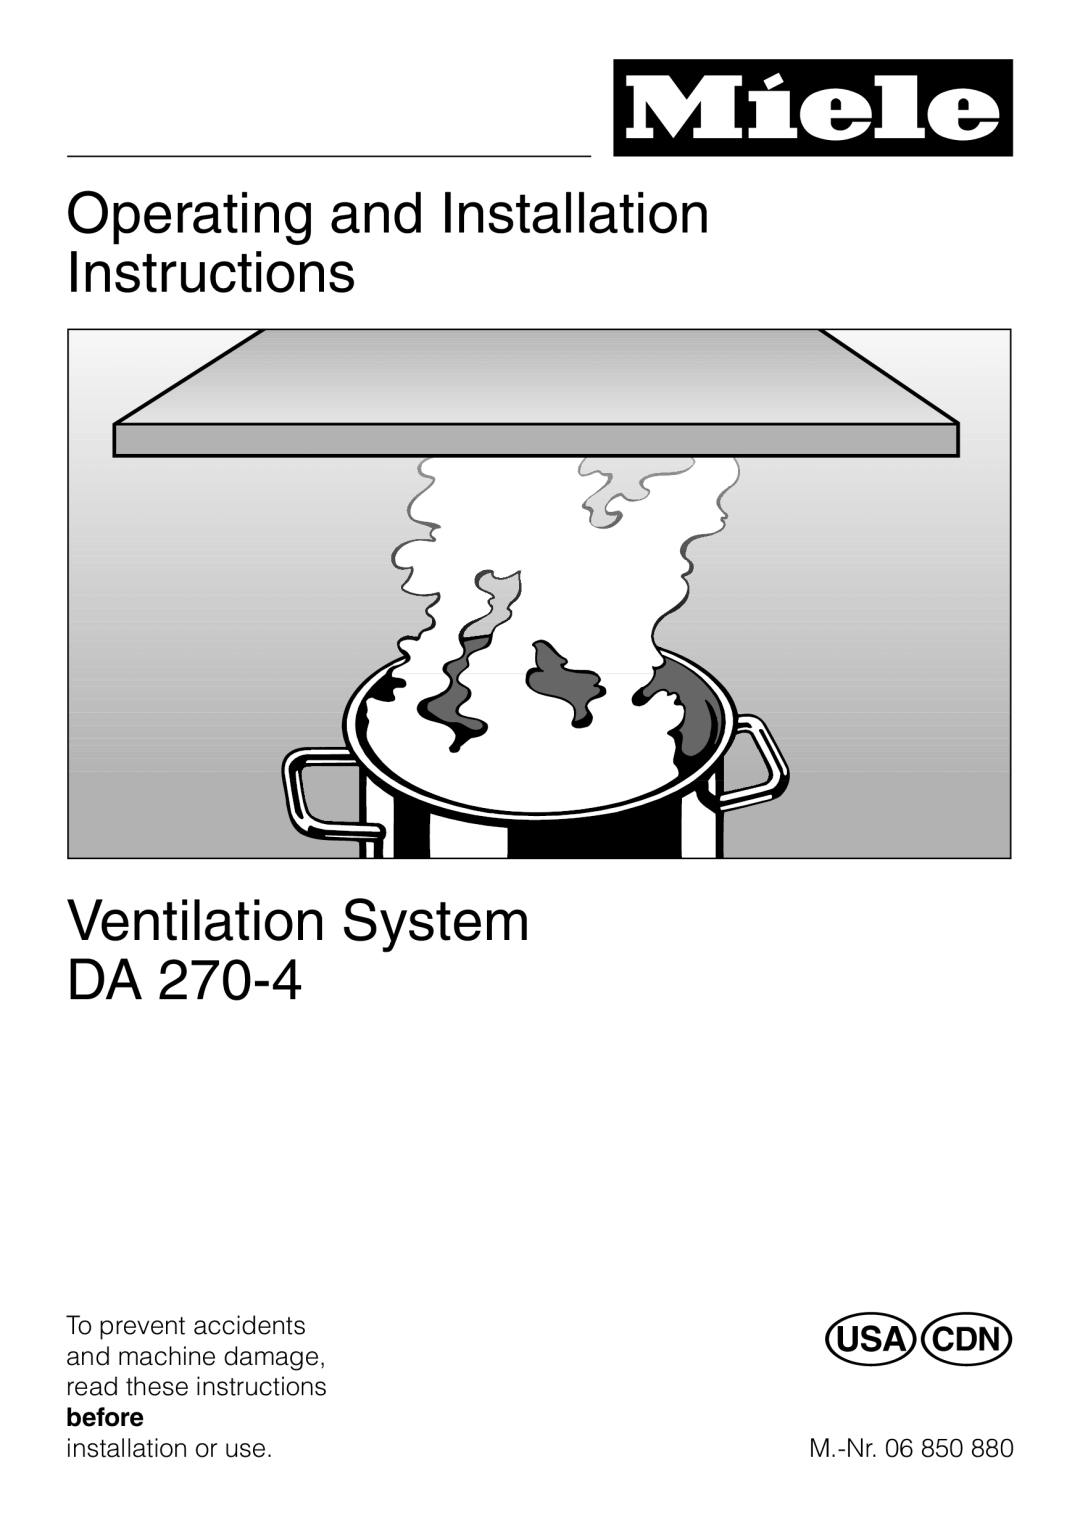 Miele DA 270-4 installation instructions Operating and Installation Instructions, Ventilation System DA, en - US, CA 